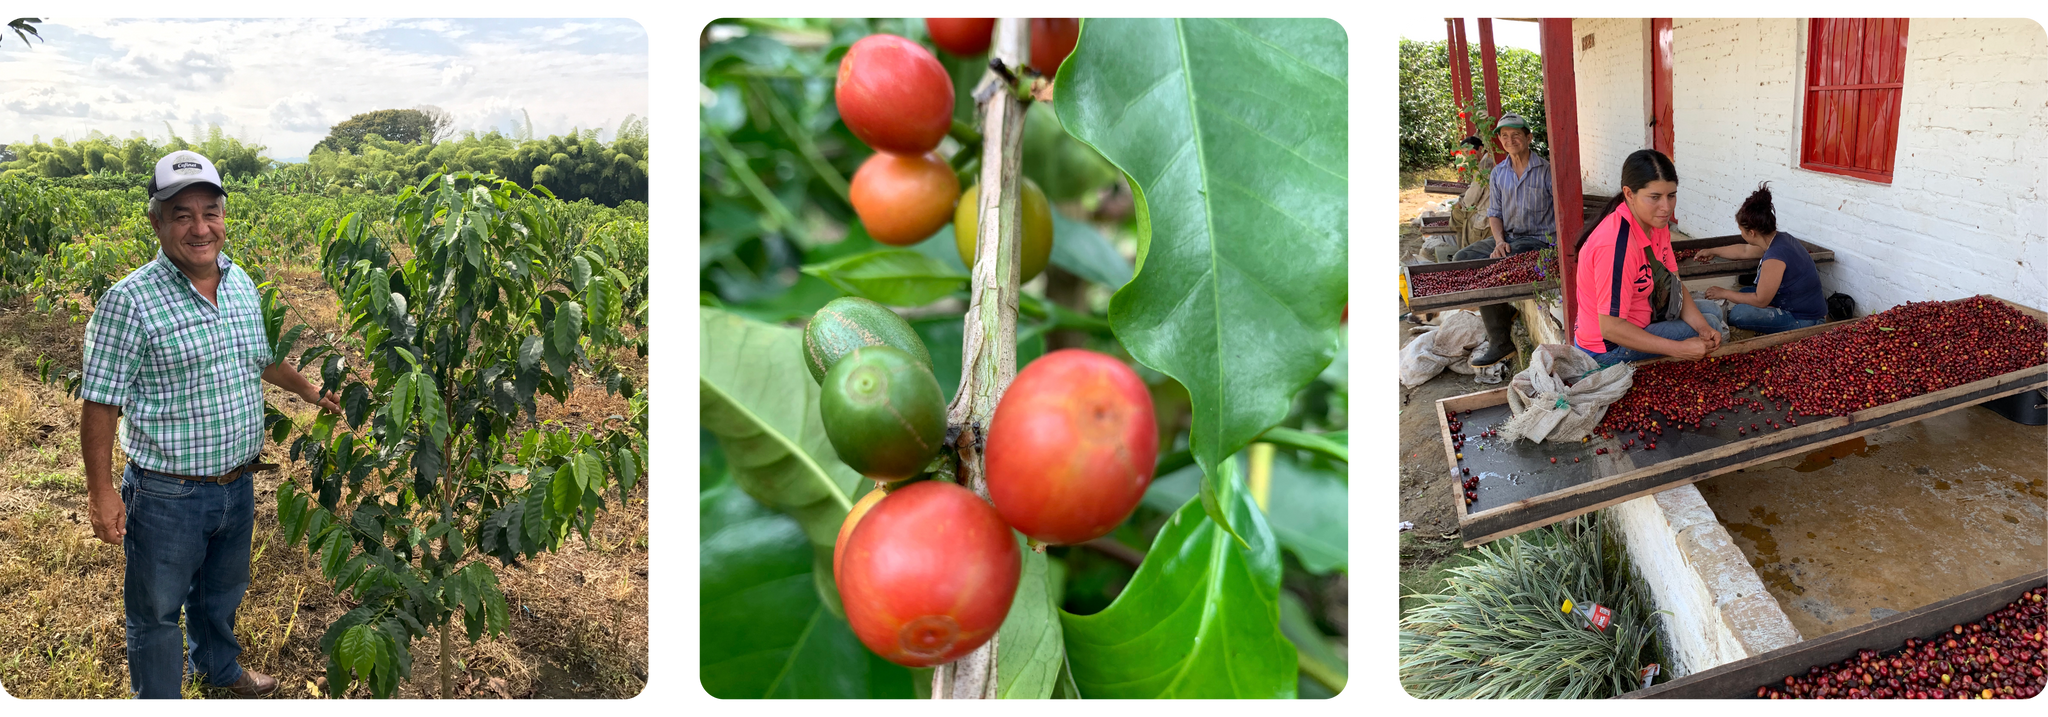 Jairo Arcila on his speciality coffee farm; Coffee cherries on the tree; Producers hand sort coffee cherries after harvesting